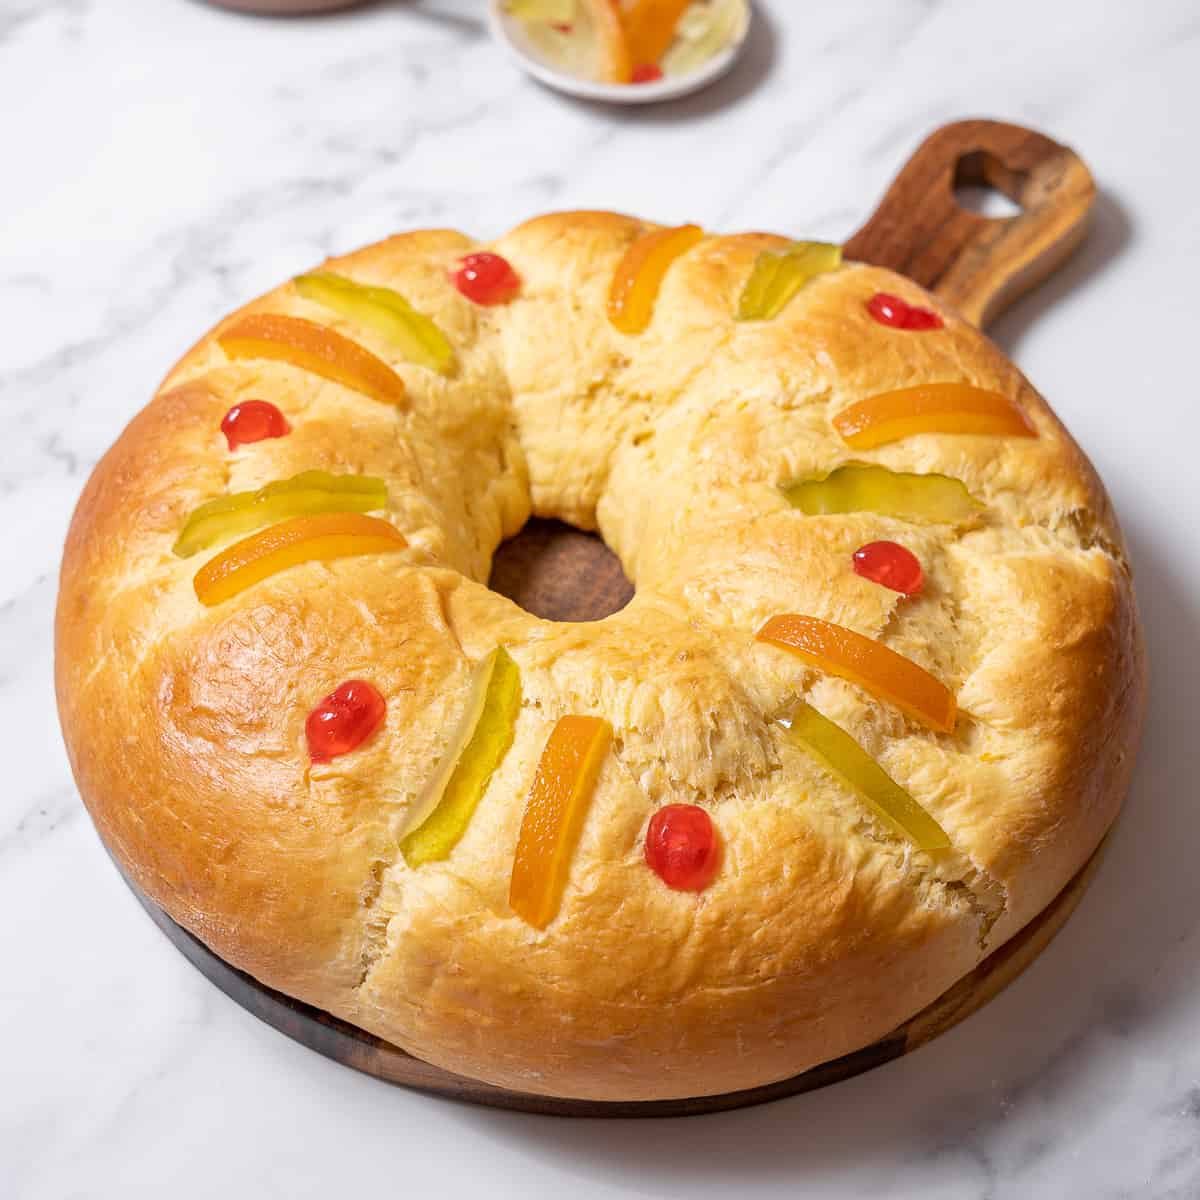 Rosca de Reyes Recipe: How to Make It